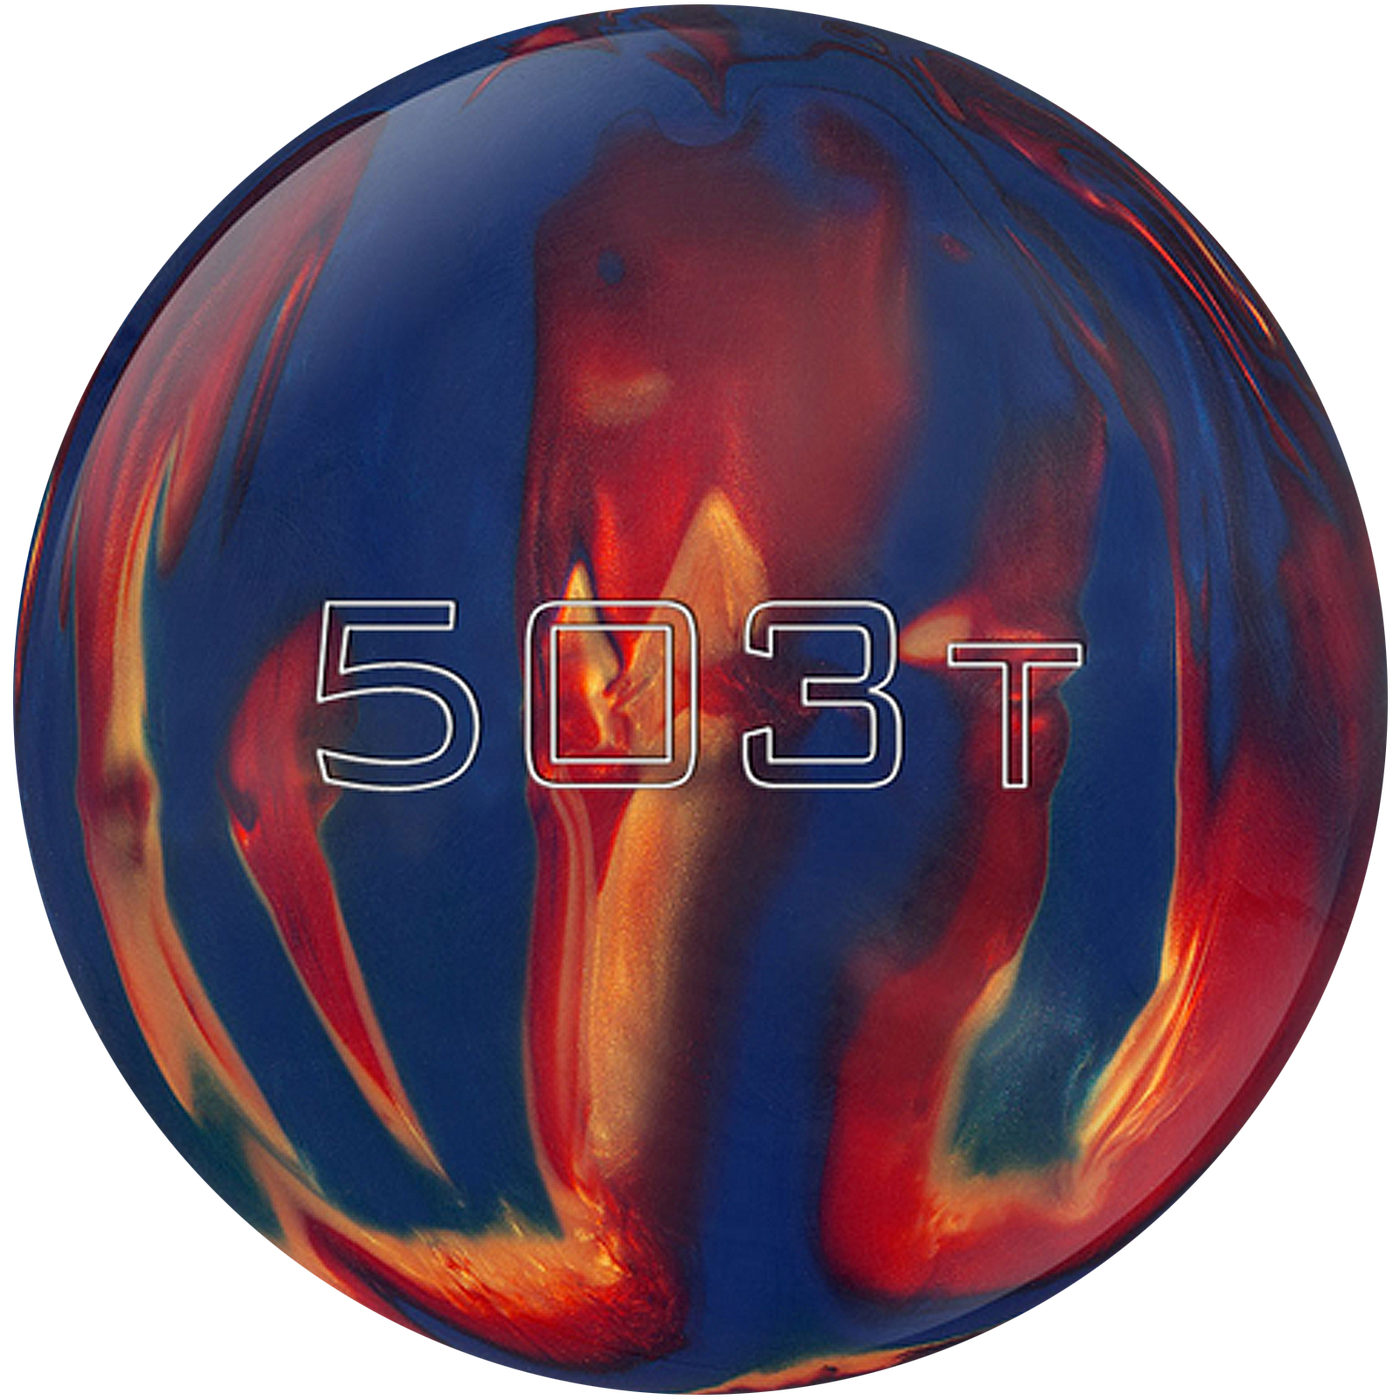 503T Bowling Ball